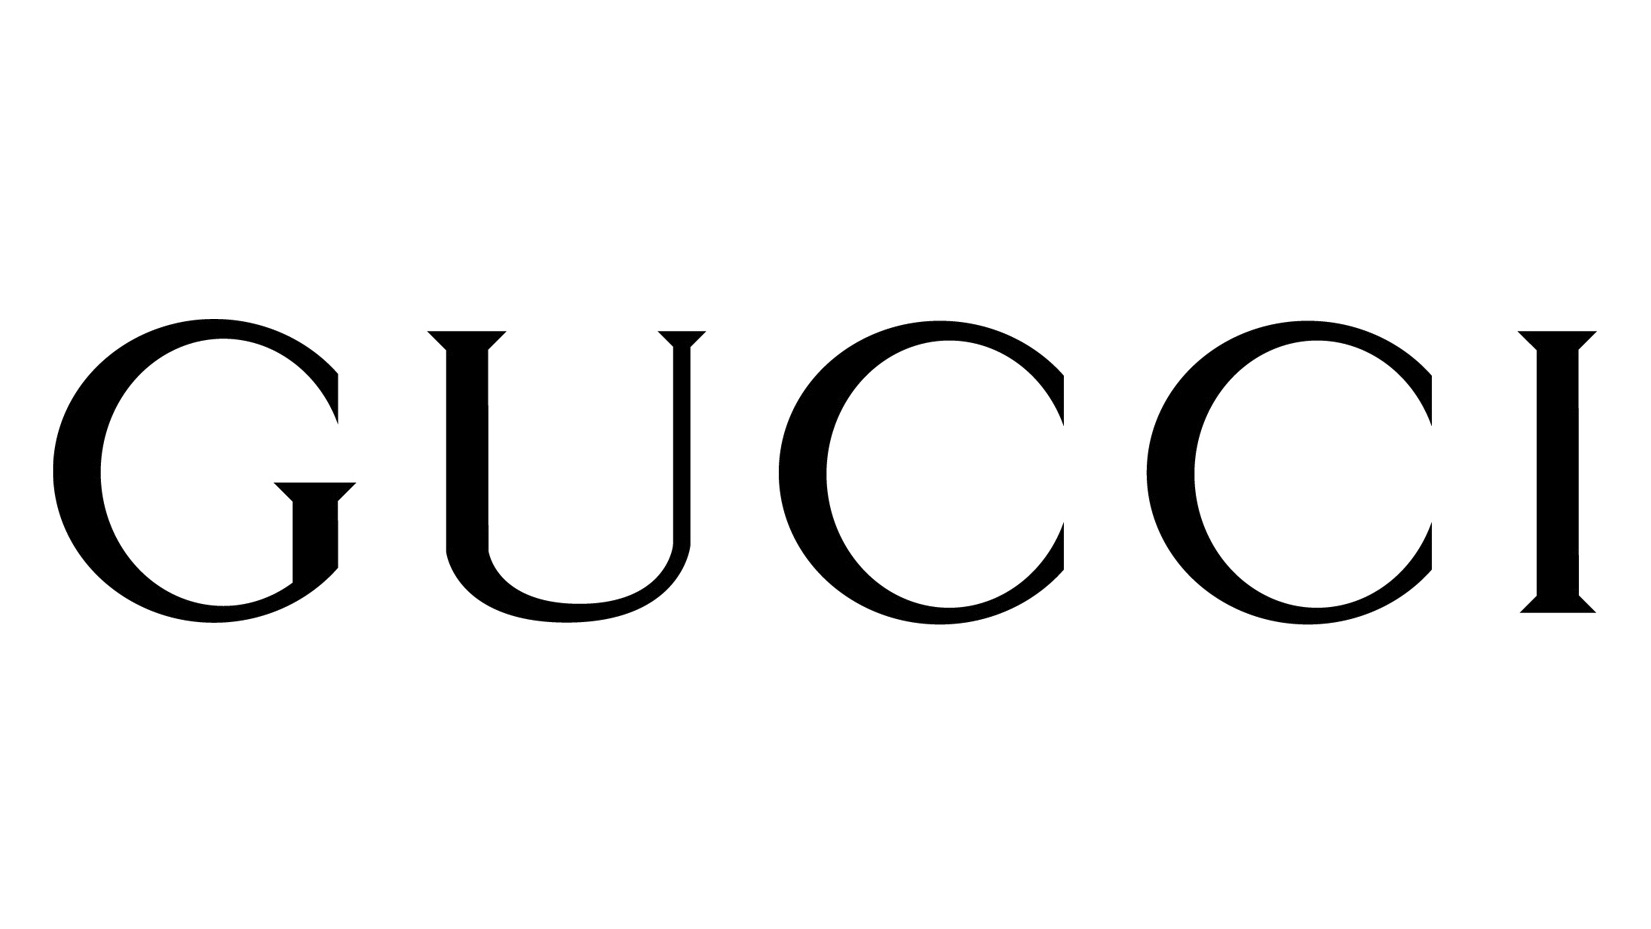 Логотип Gucci